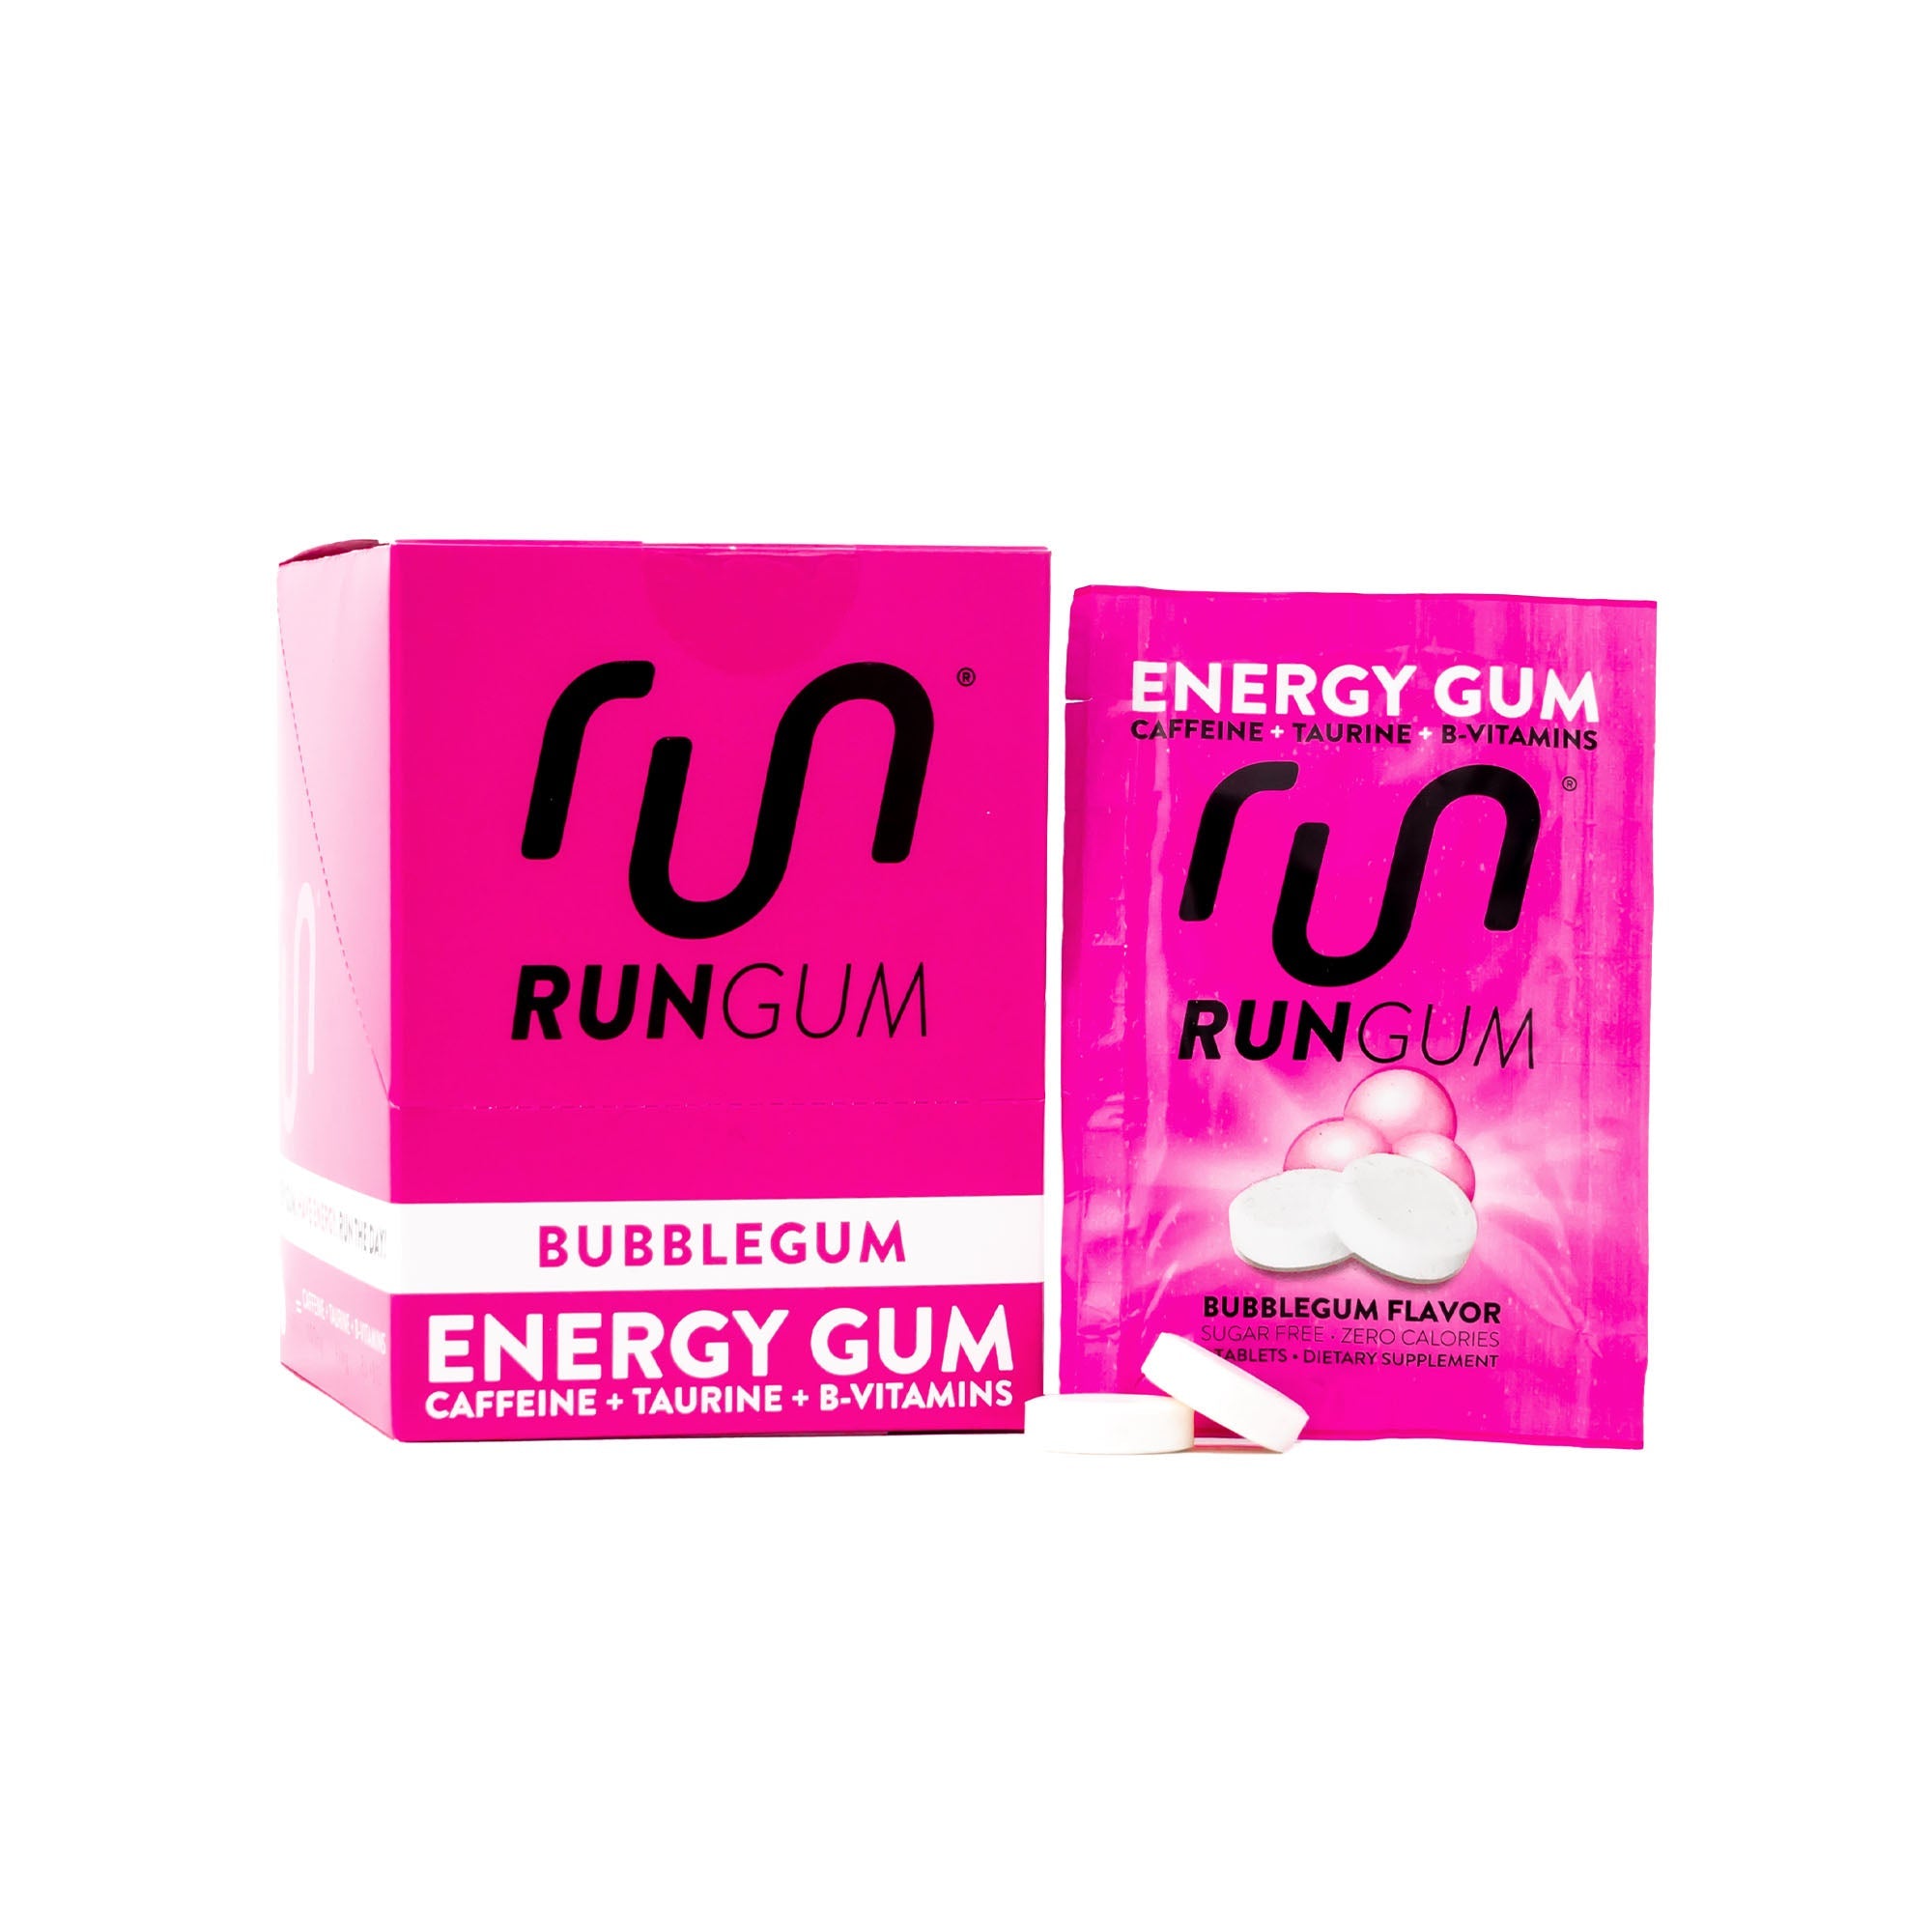 Energy Gum Original | Caffeine Chewing by Run Athletes, Runners,